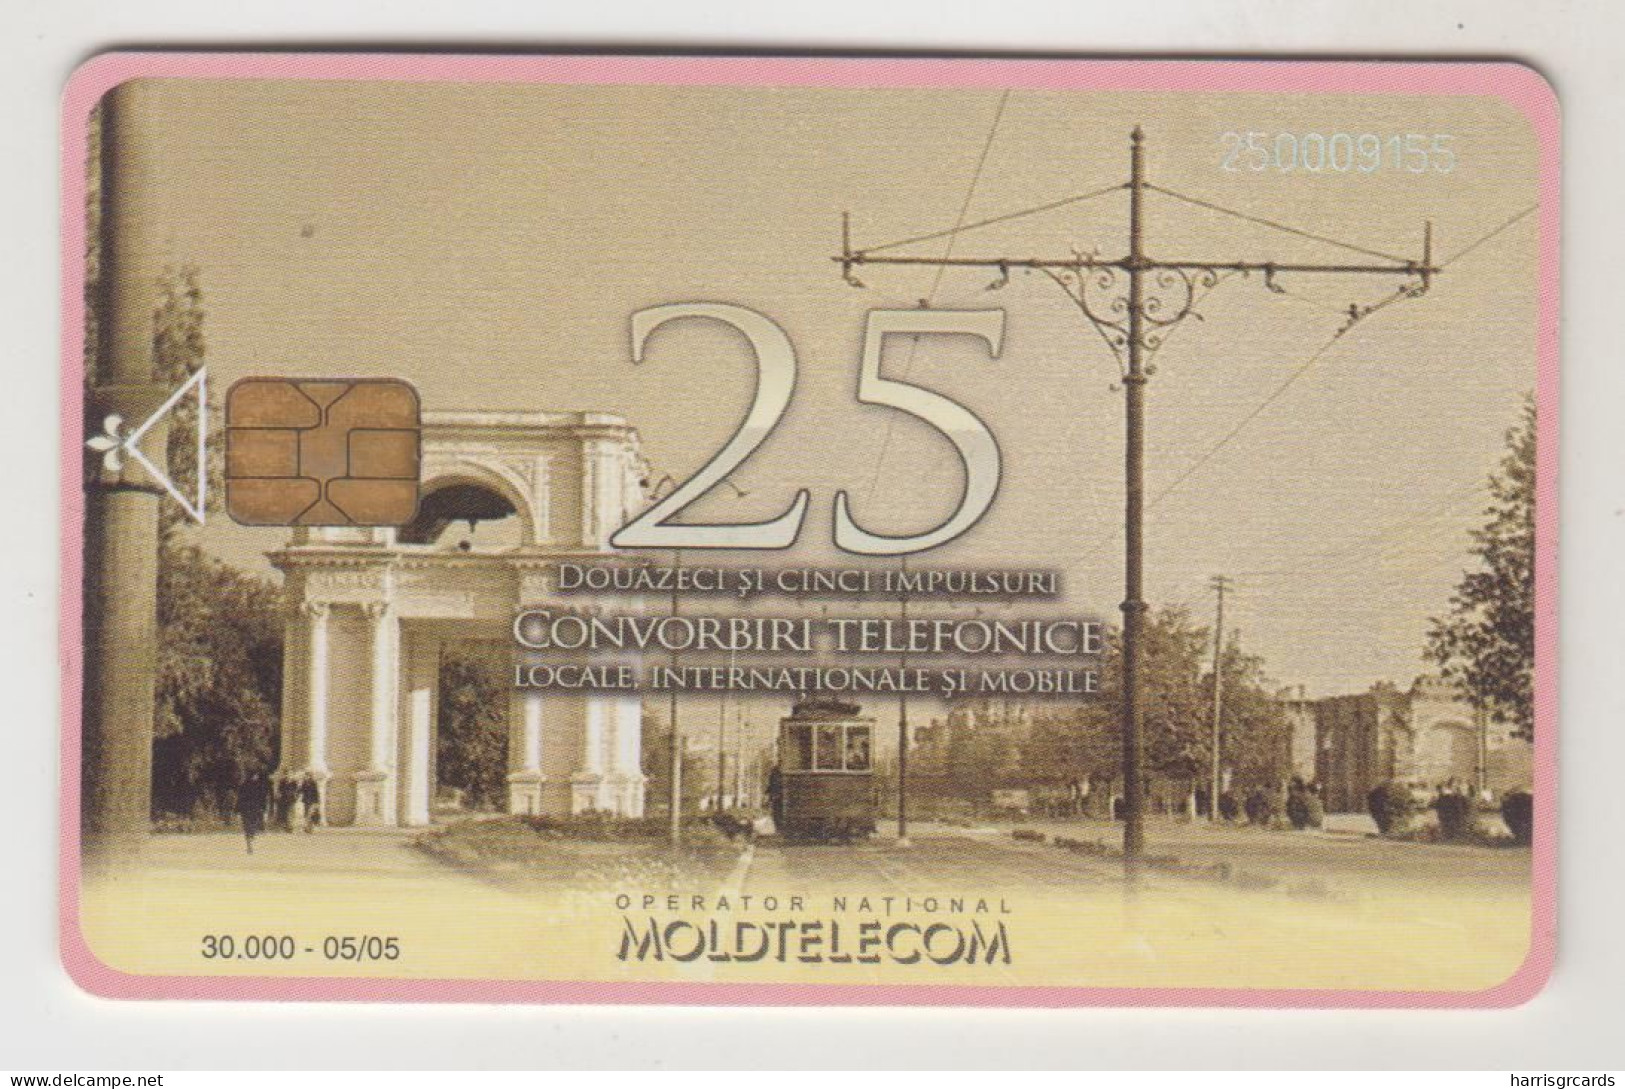 MOLDOVA - Strada Alexandru Cel Bun, Chip:CHT08, Moldtelecom 25 Units, 05/05, Tirage 30.000,used - Moldova